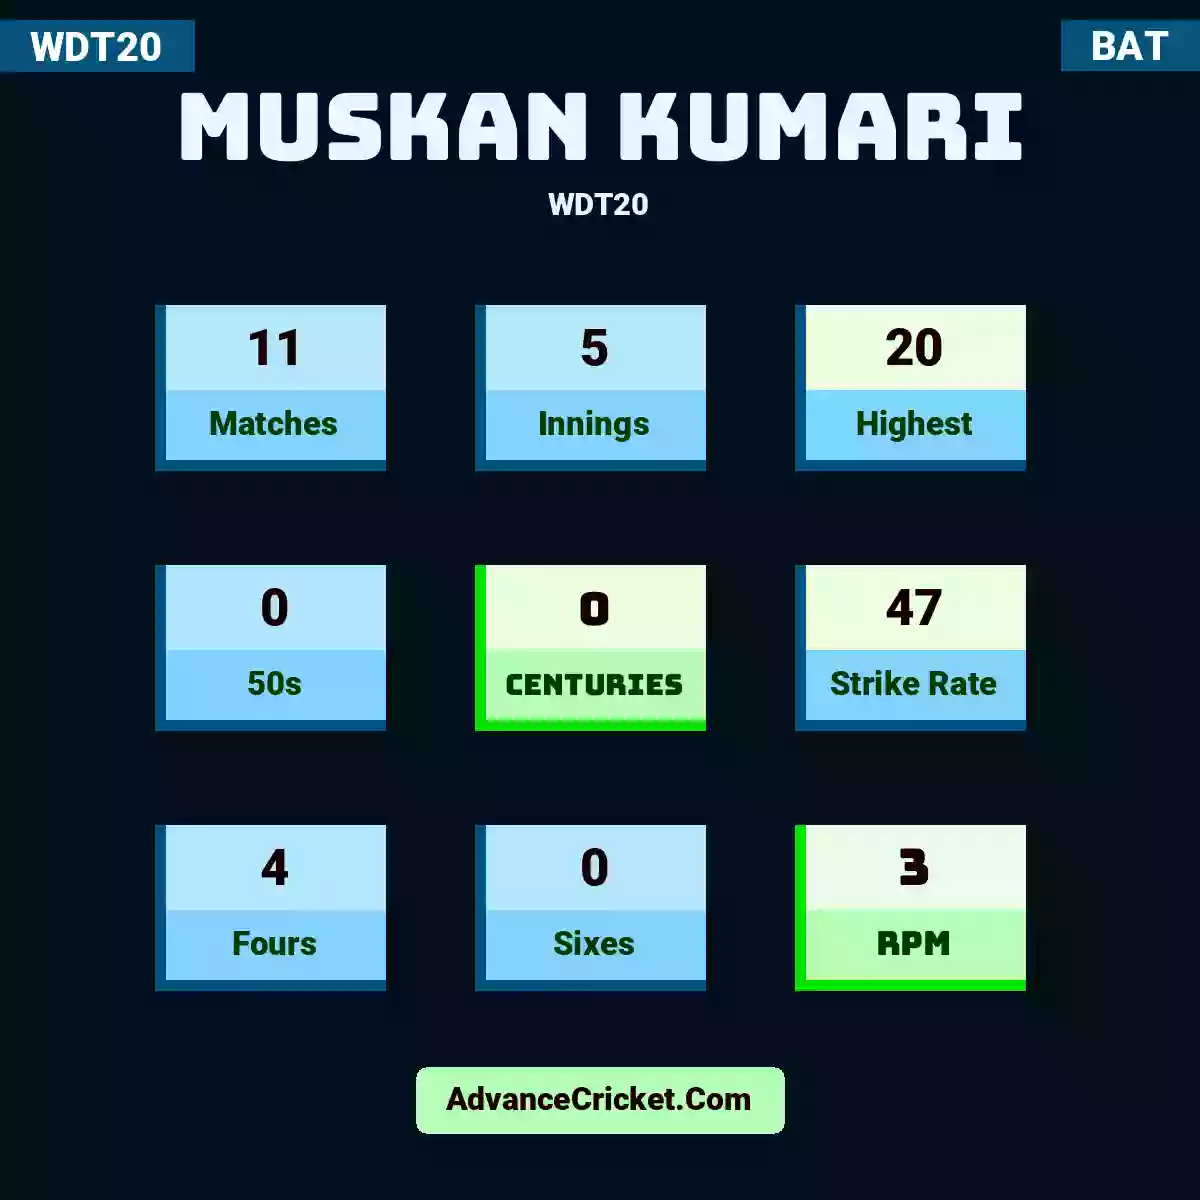 Muskan Kumari WDT20 , Muskan Kumari played 11 matches, scored 20 runs as highest, 0 half-centuries, and 0 centuries, with a strike rate of 47. M.Kumari hit 4 fours and 0 sixes, with an RPM of 3.